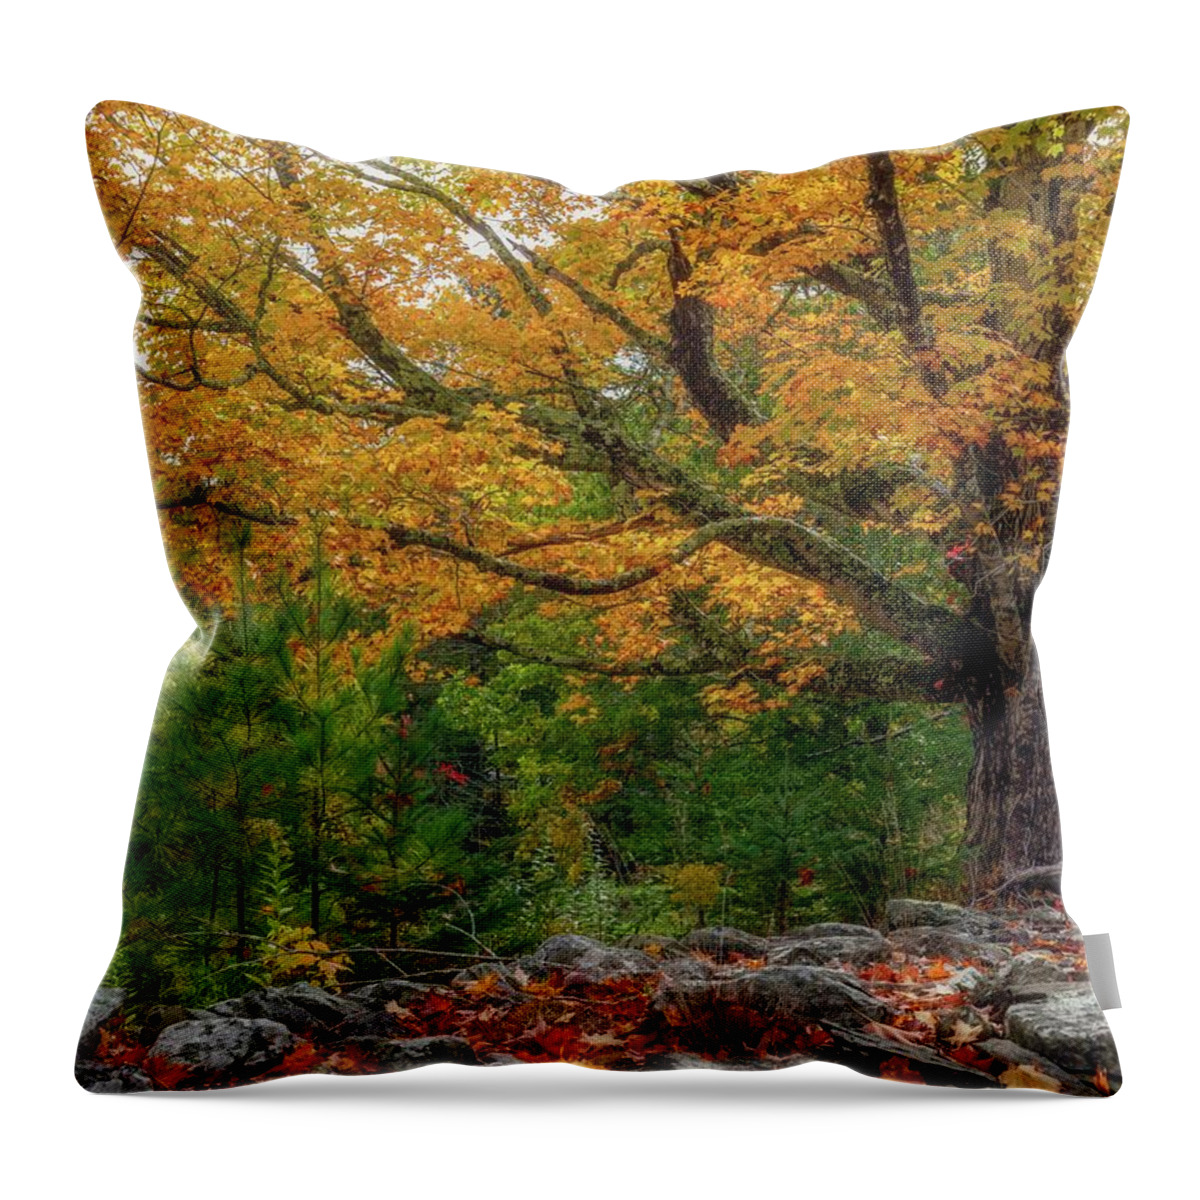 Autumn Throw Pillow featuring the photograph Autumn Wall by Karin Pinkham